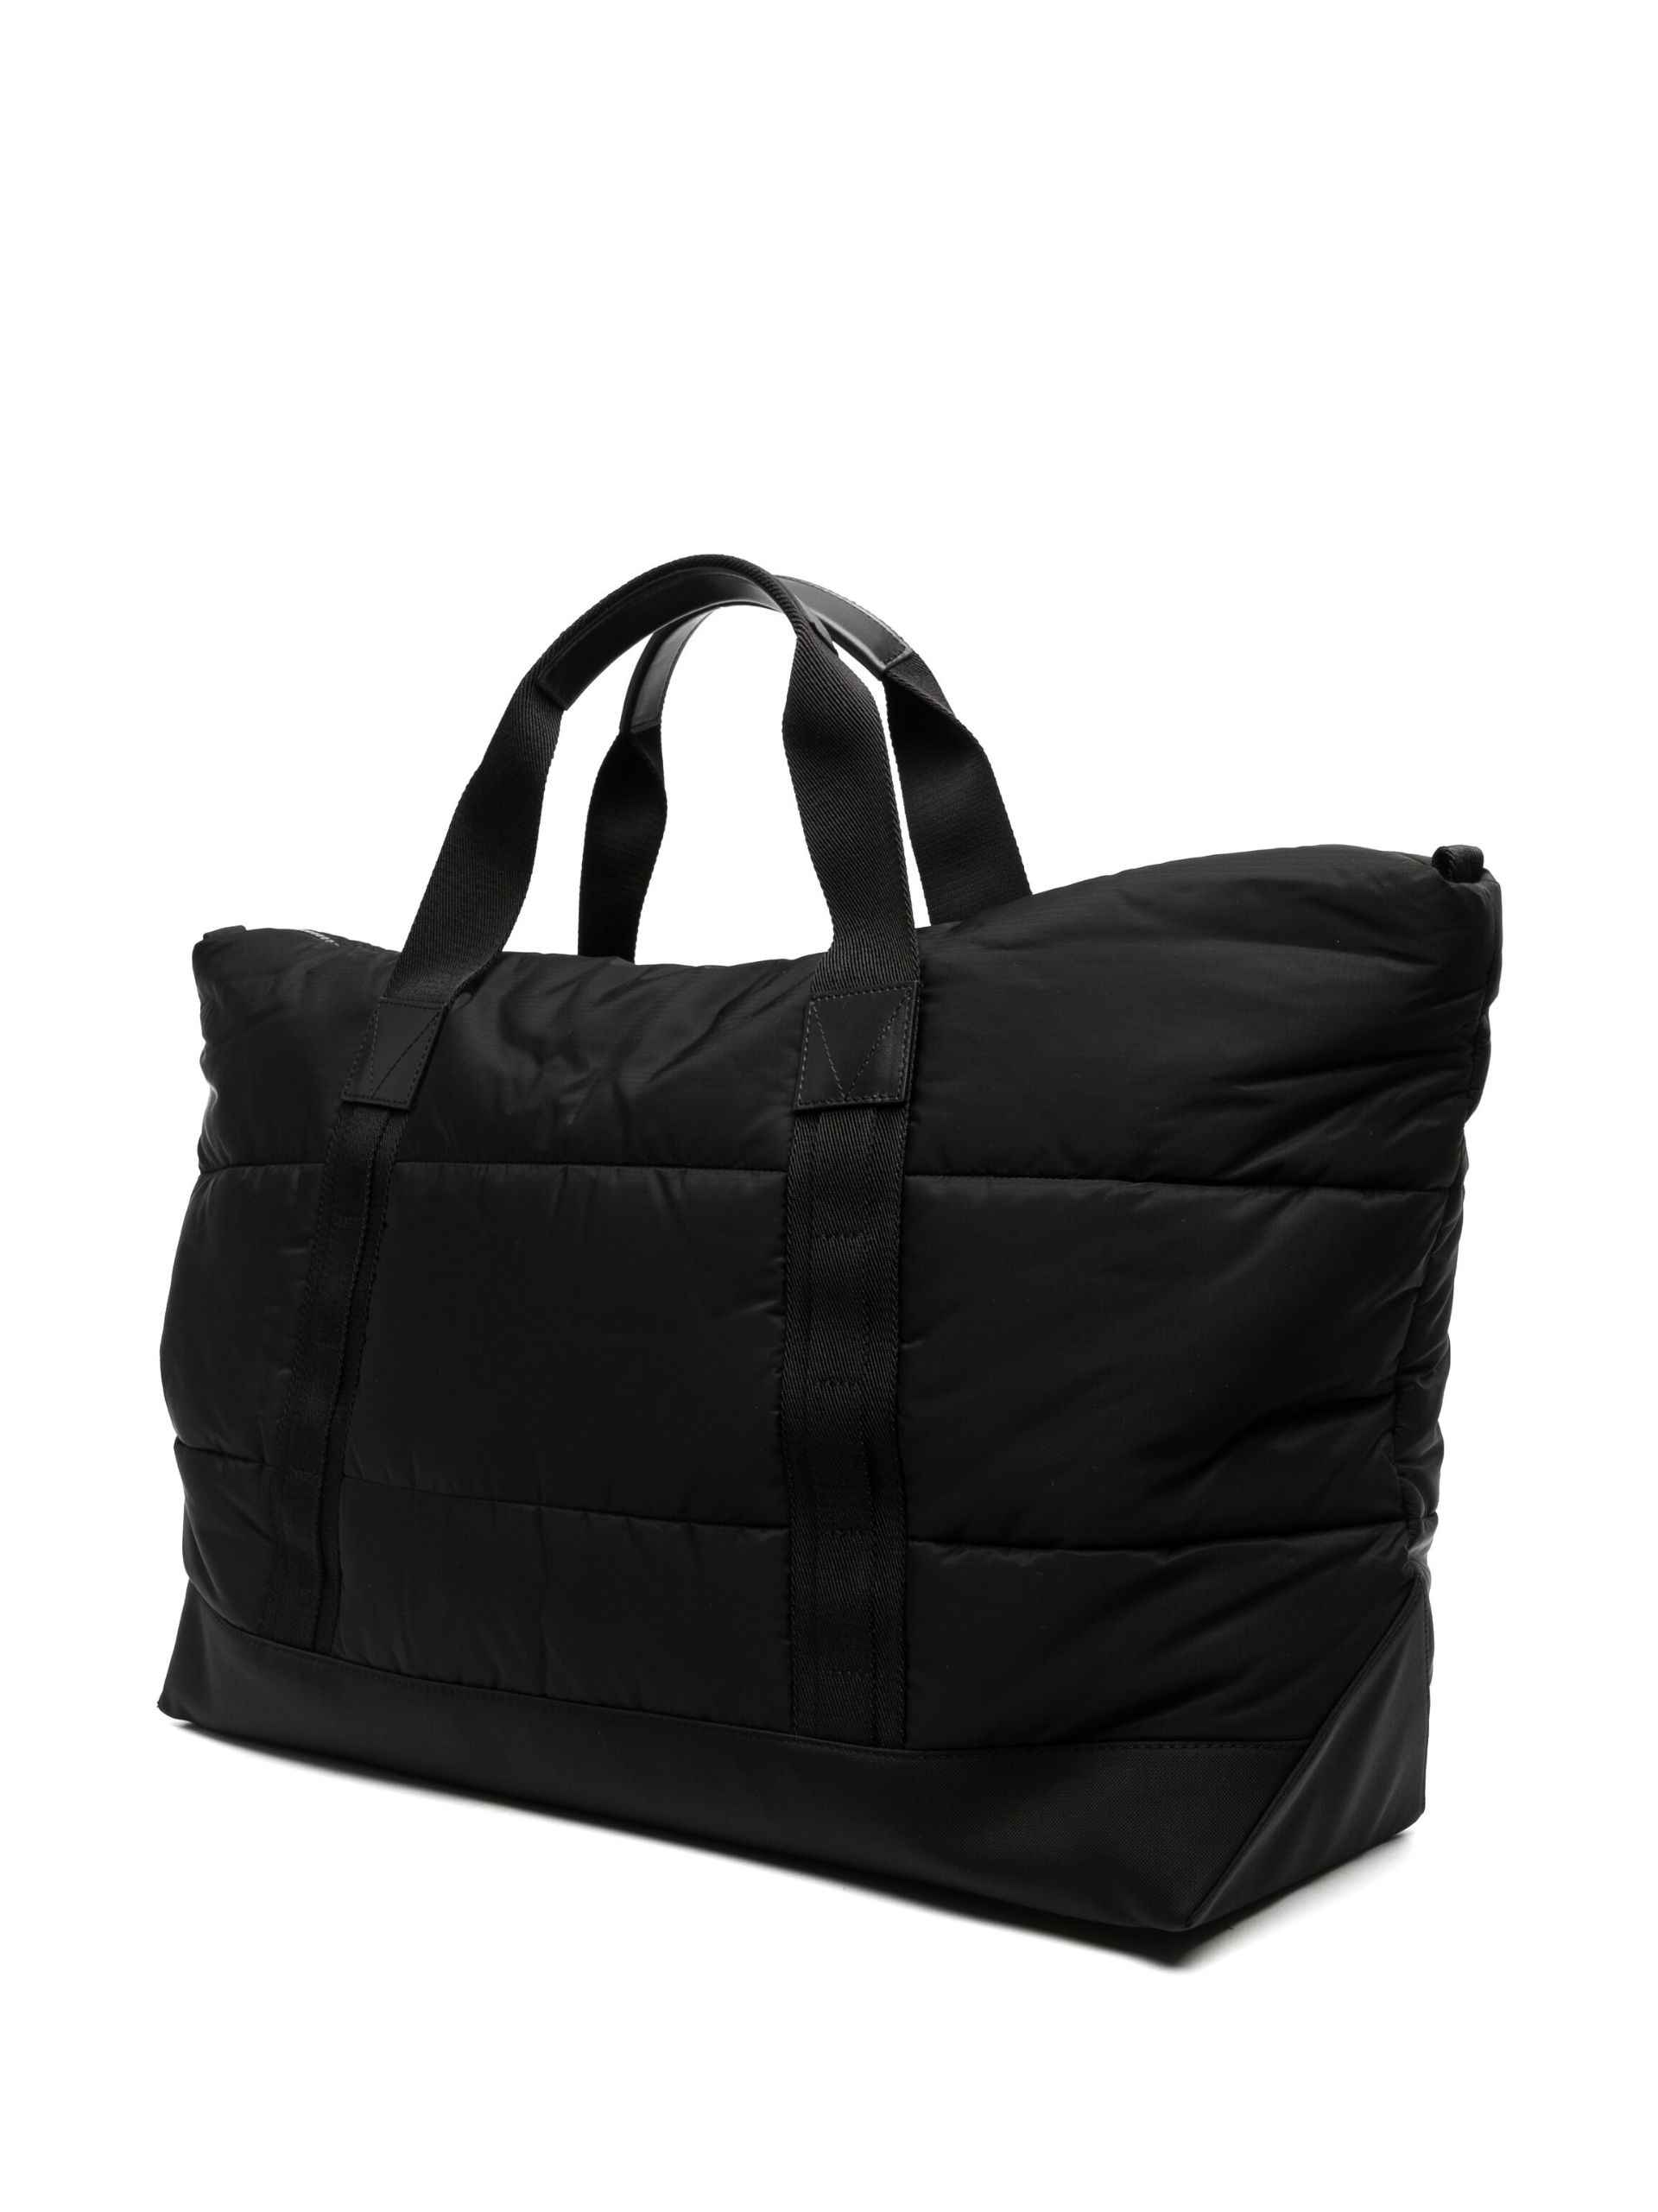 Black Makaio Duffle Bag - 2